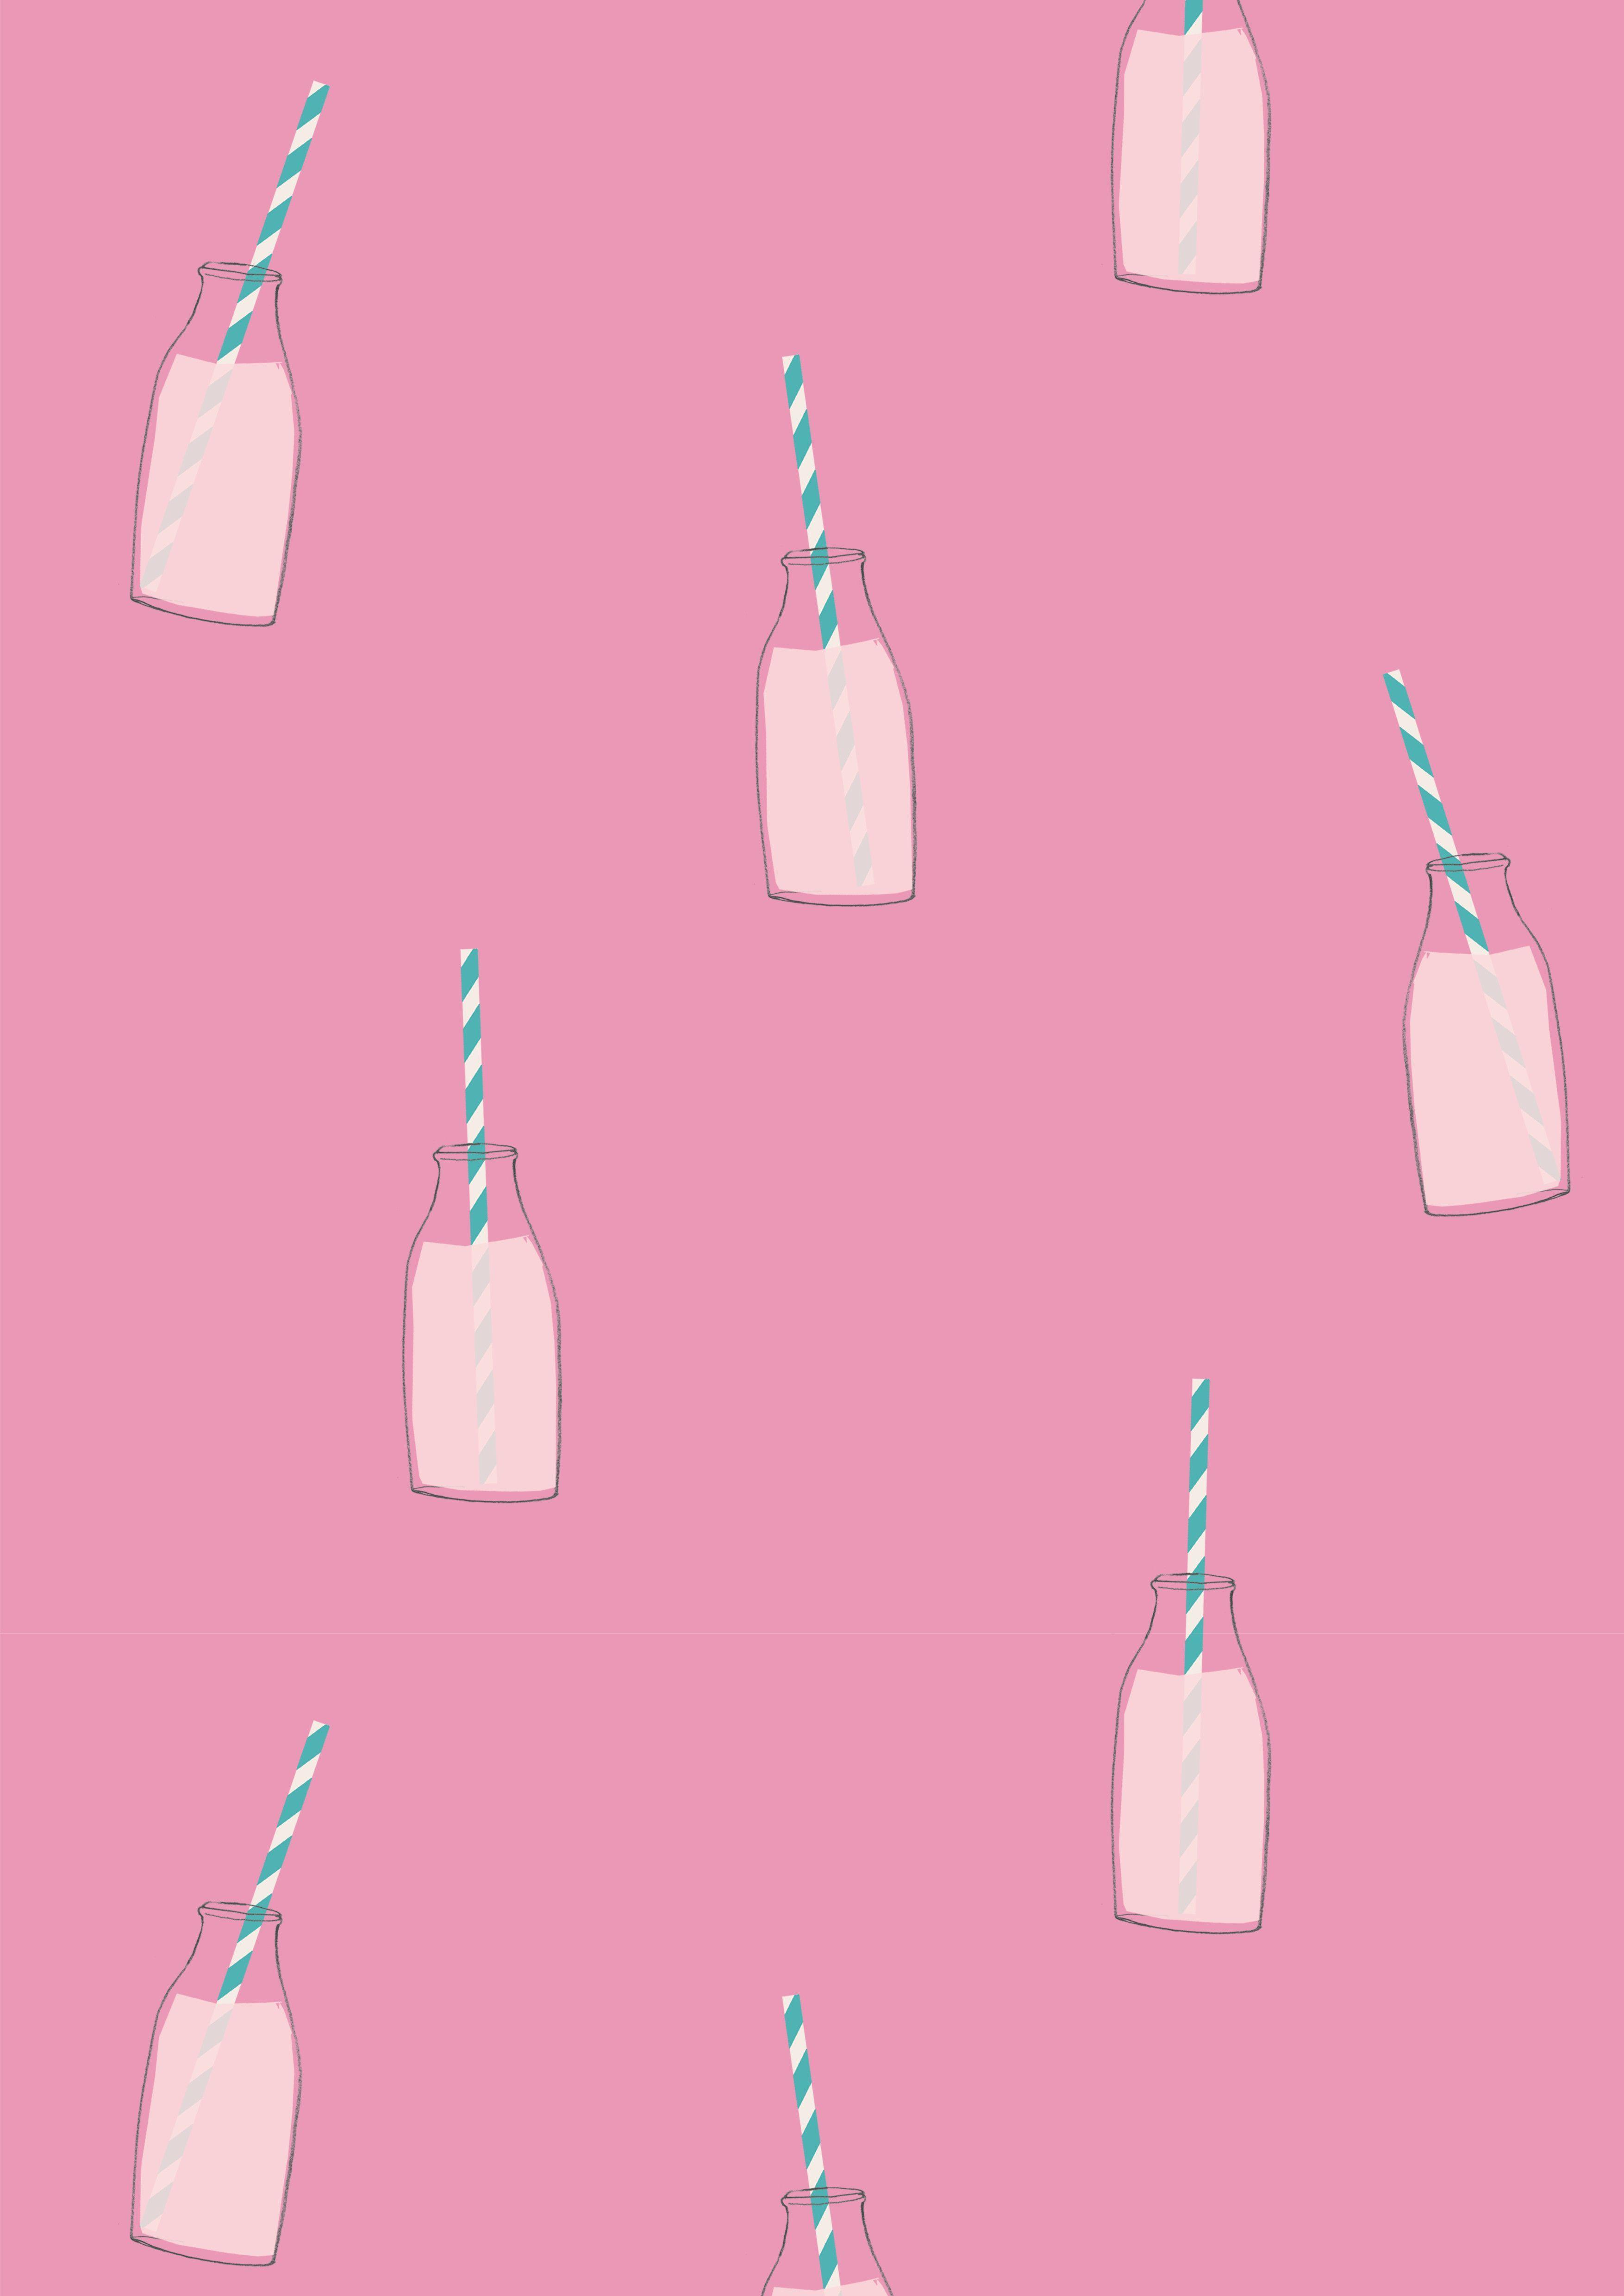 Milk bottle. Patterns & Textures. Illustration